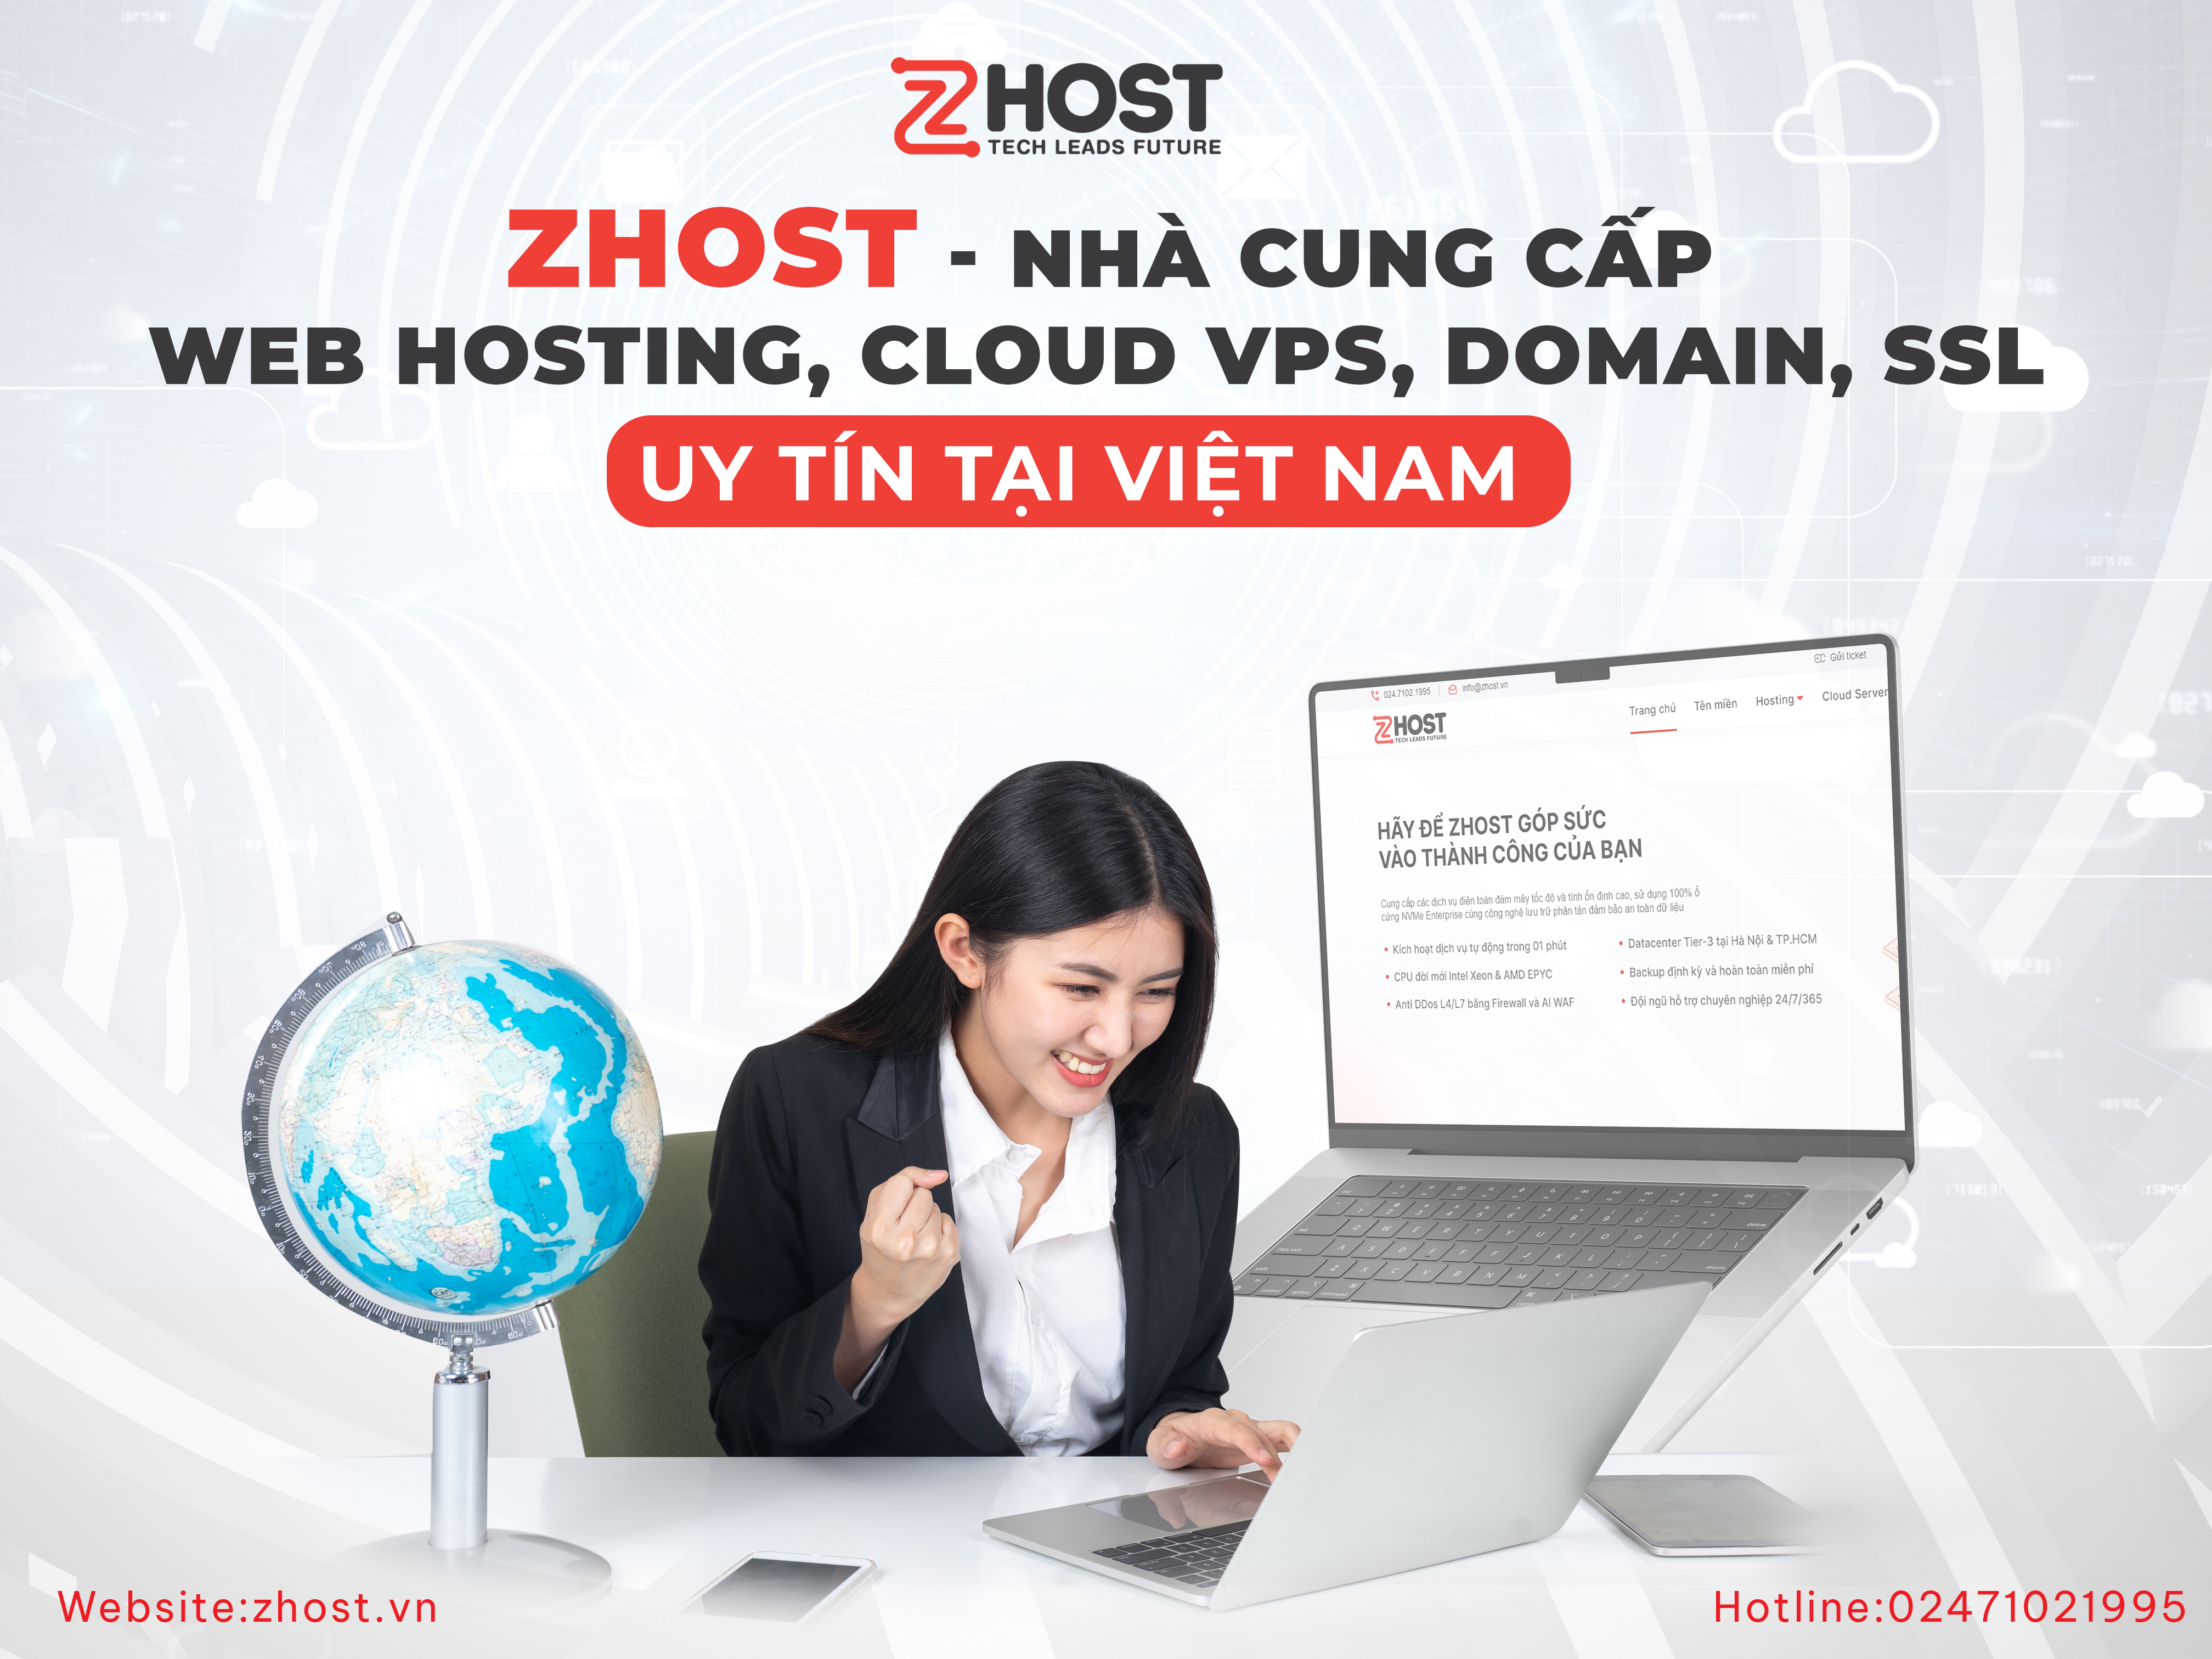 Zhost-nha-cung-cap-hosting-cloudvps-domain-ssl-uy-tin-hang-dau-viet-nam